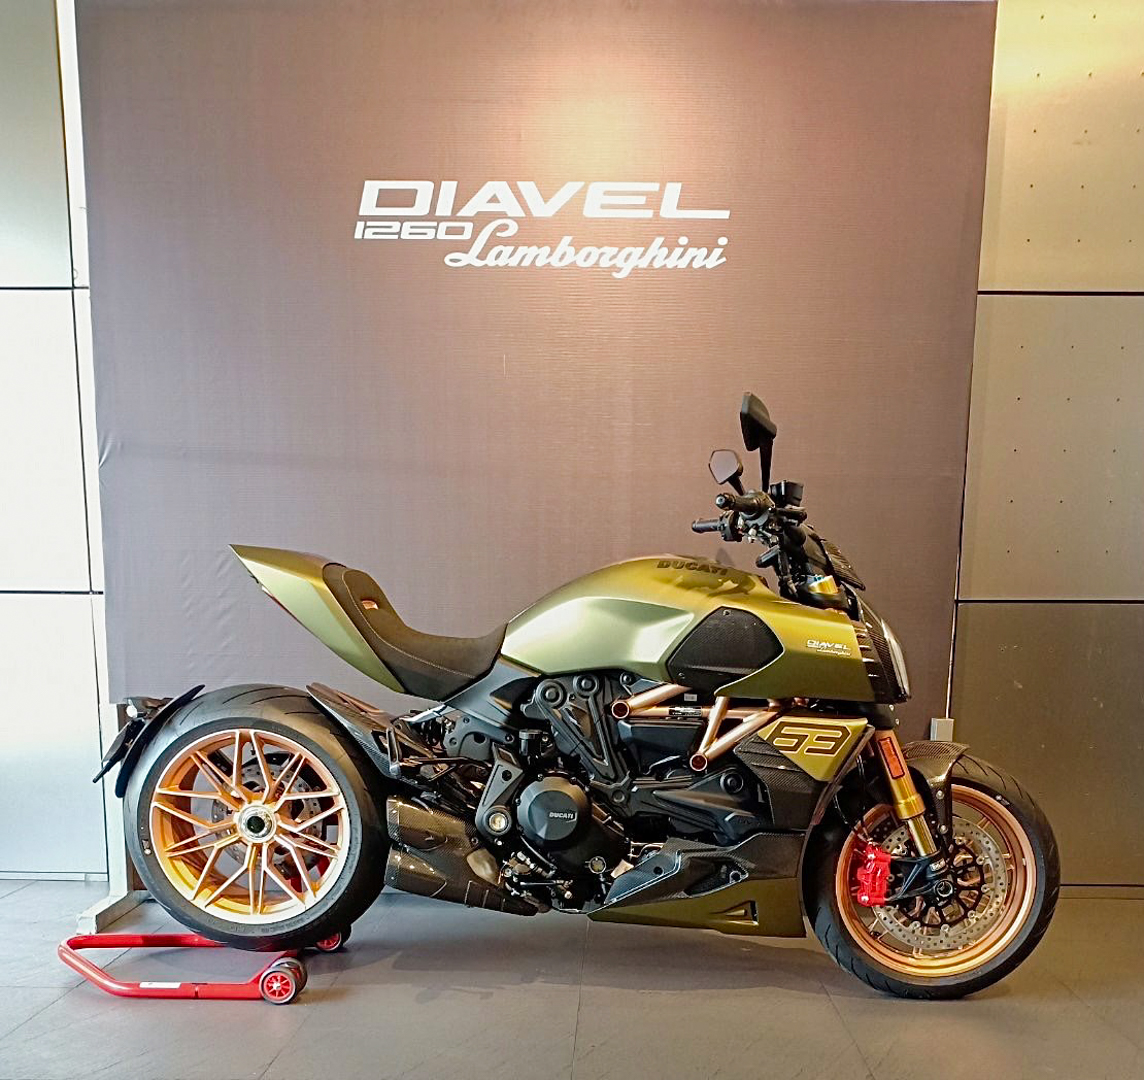 Ducati Diavel 1260 Lamborghini launched and sold in PH